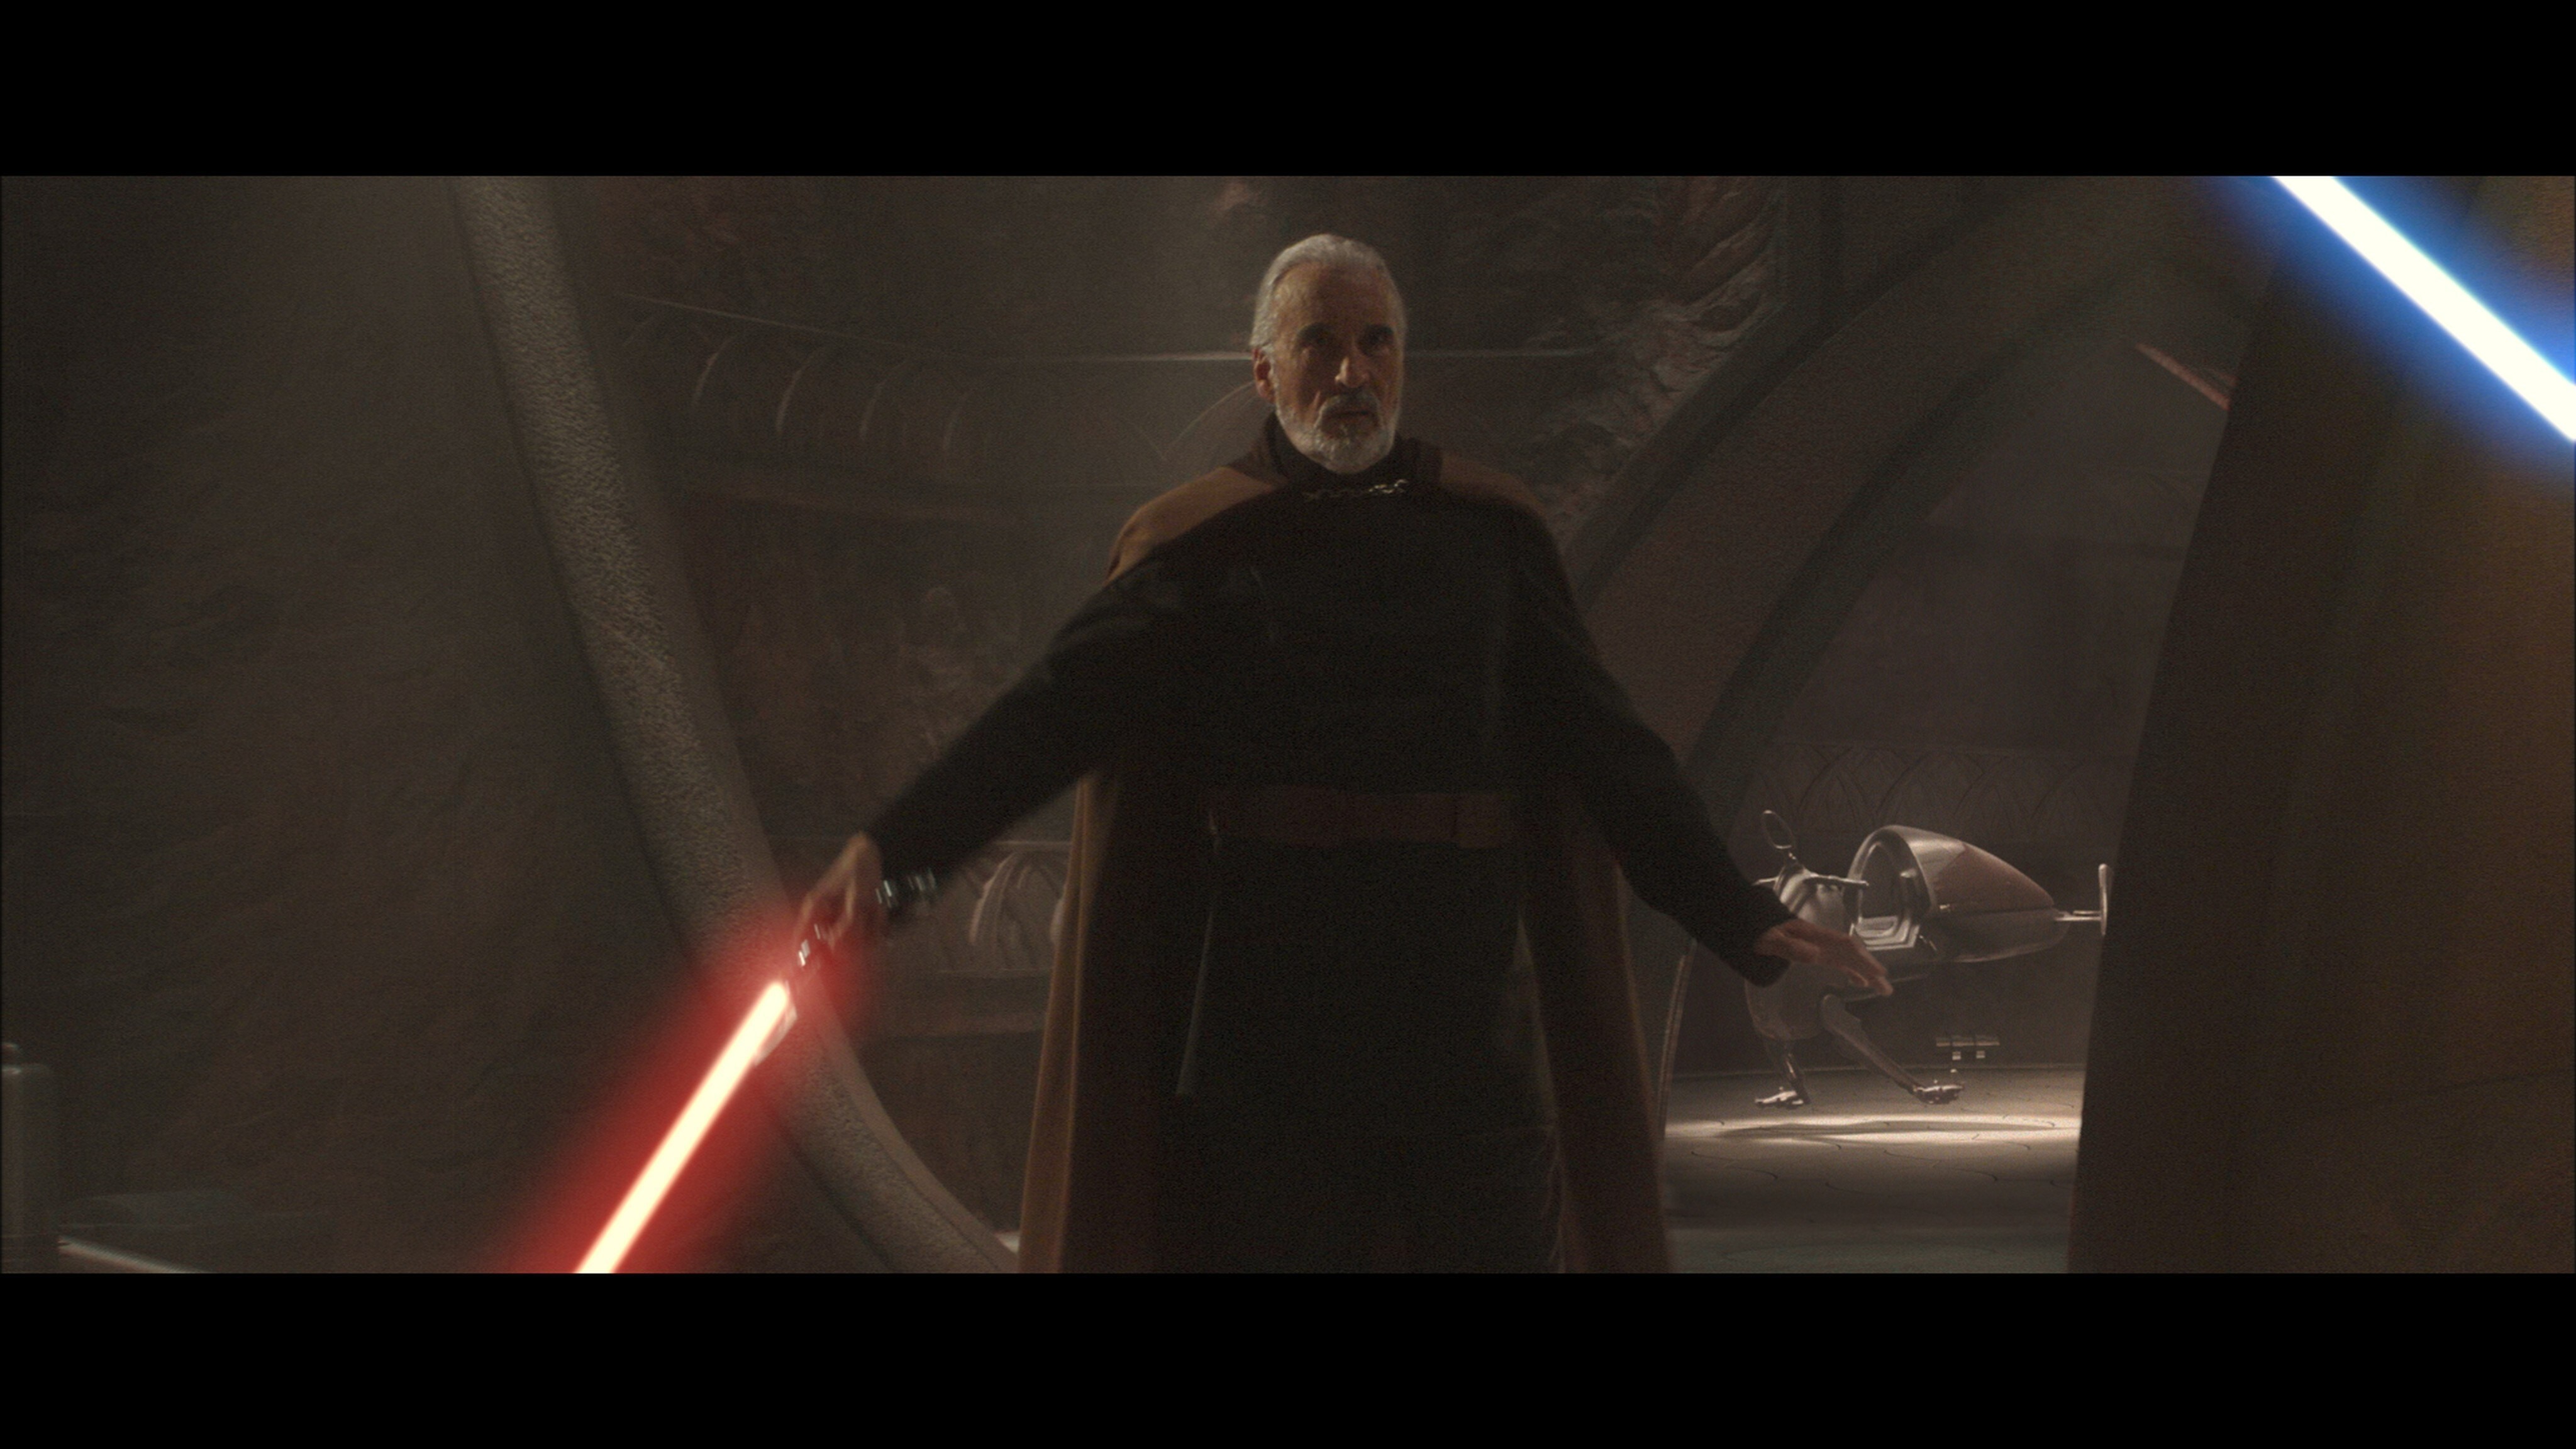 Christopher Lee as Count Dooku, ready to battle Anakin Skywalker and Obi-Wan Kenobi